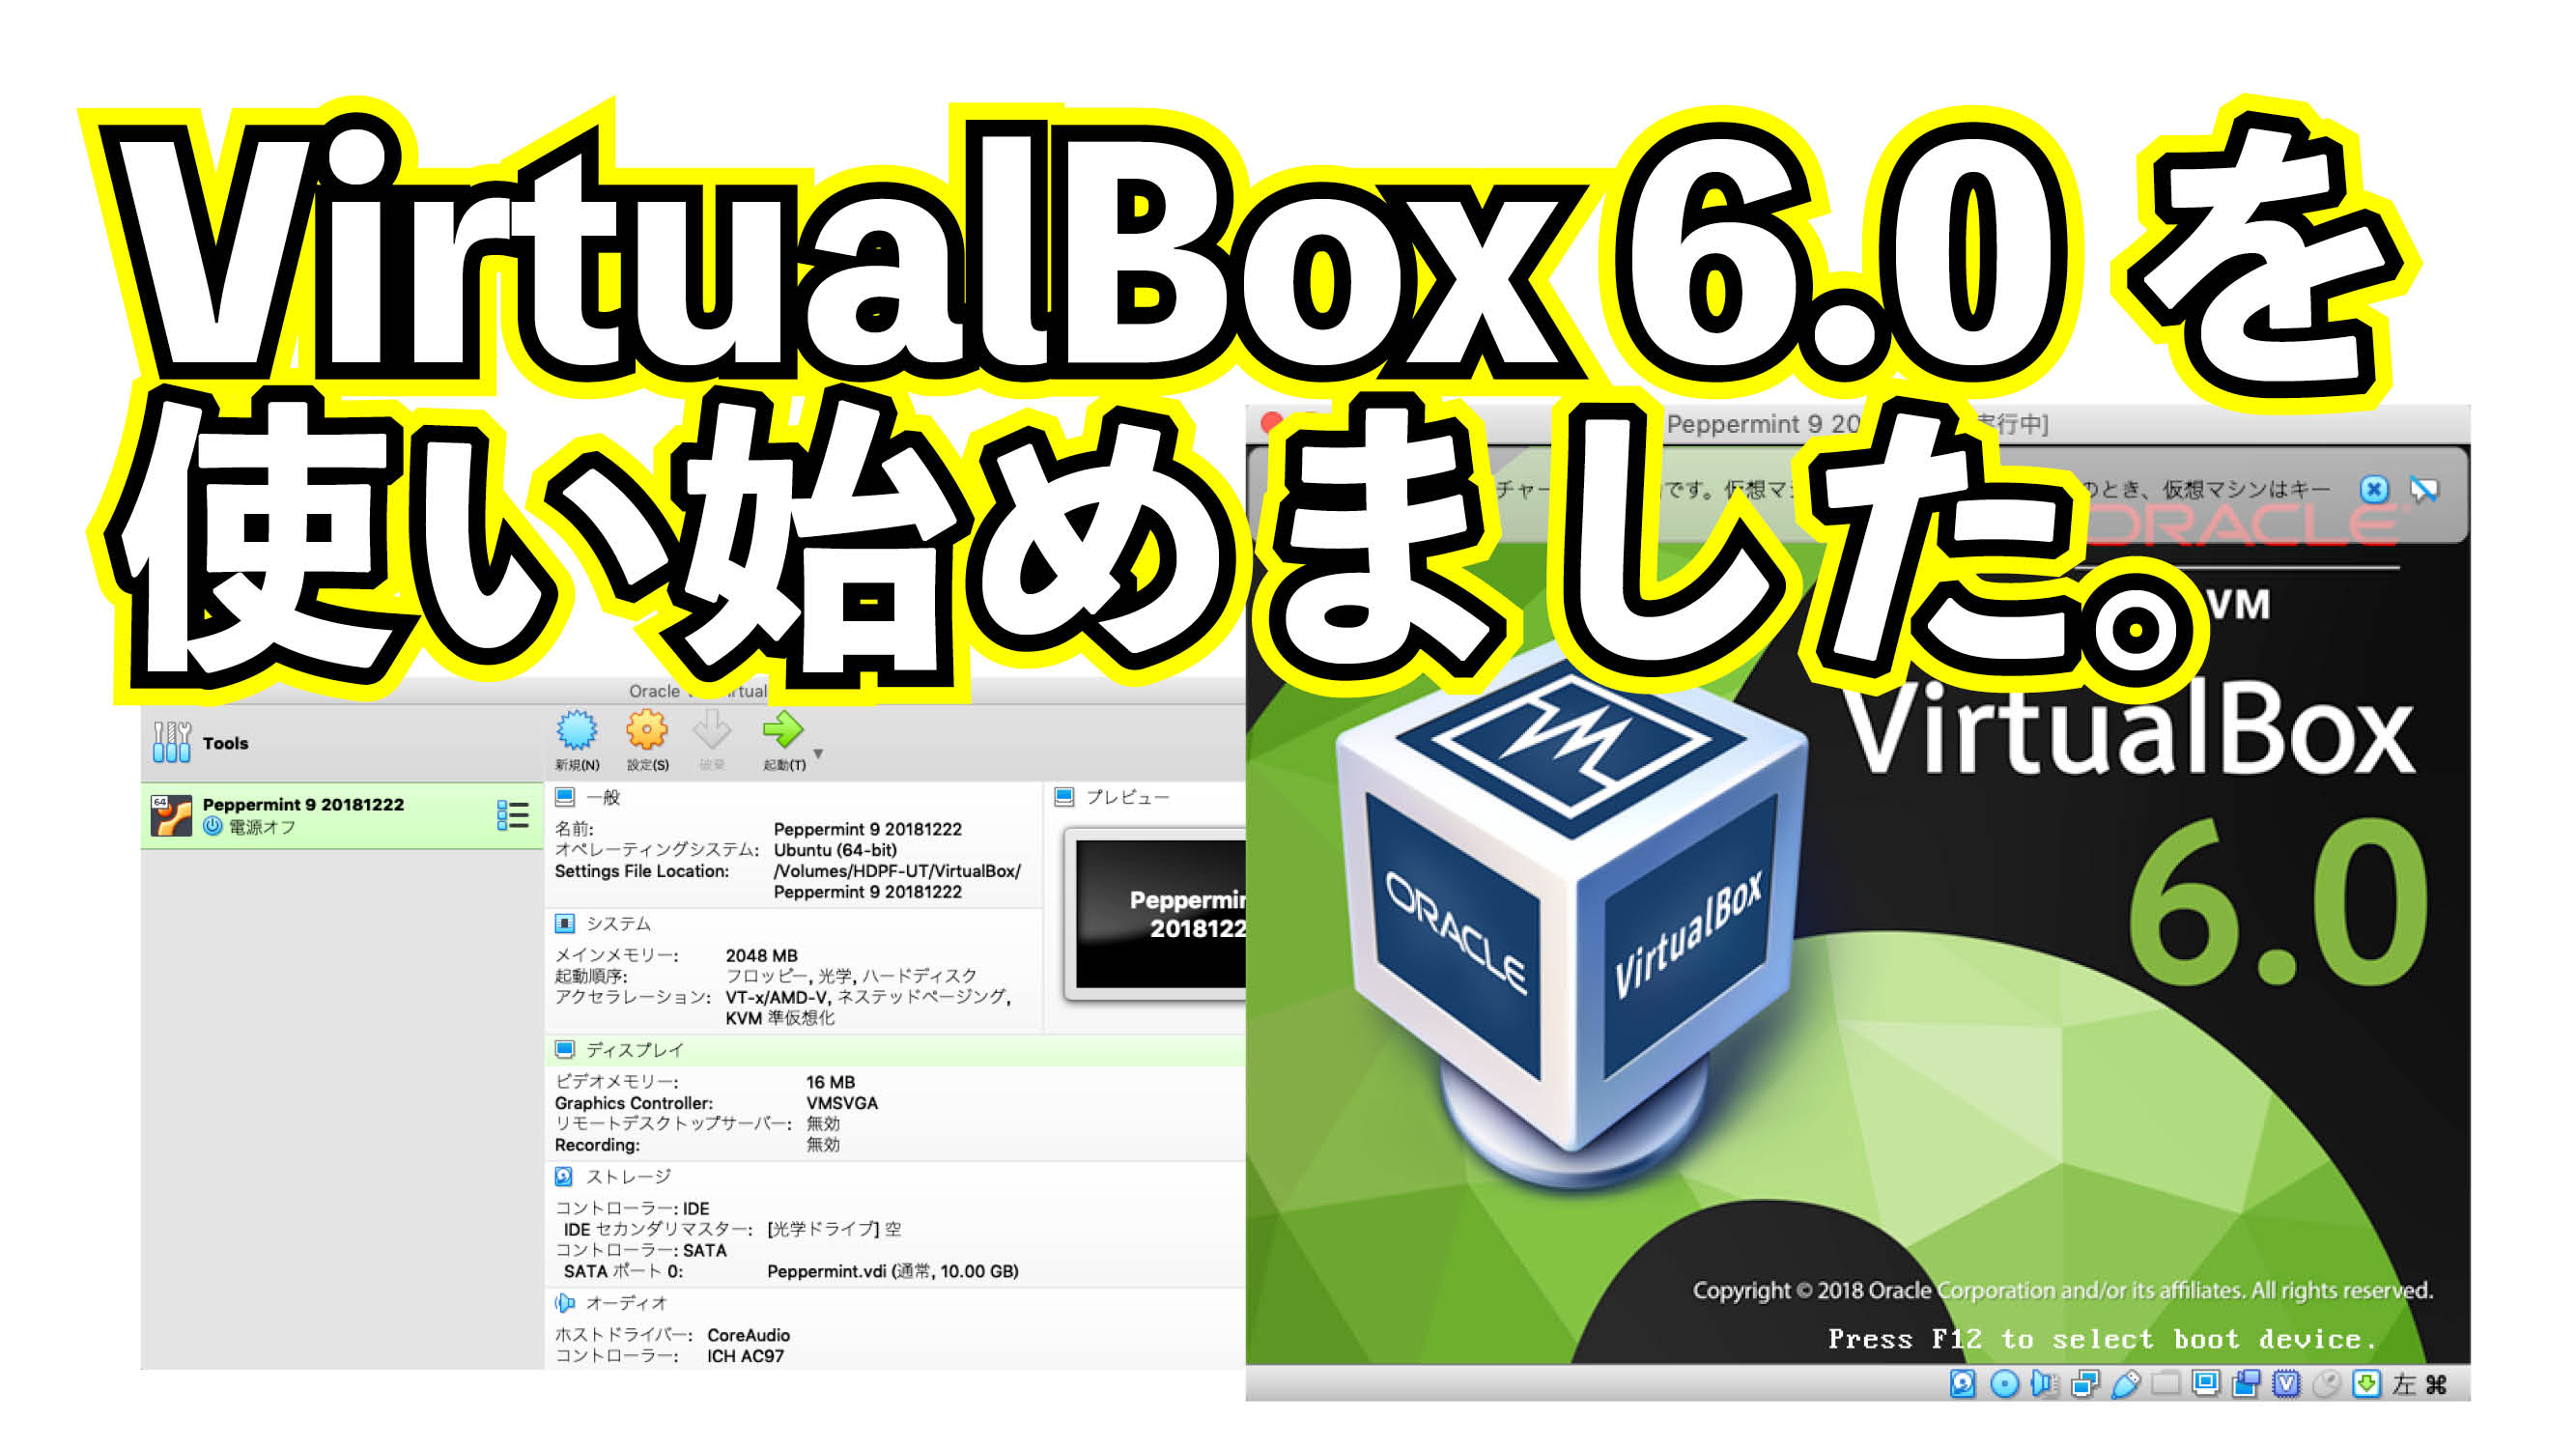 virtualbox 6.0 を使い始めました